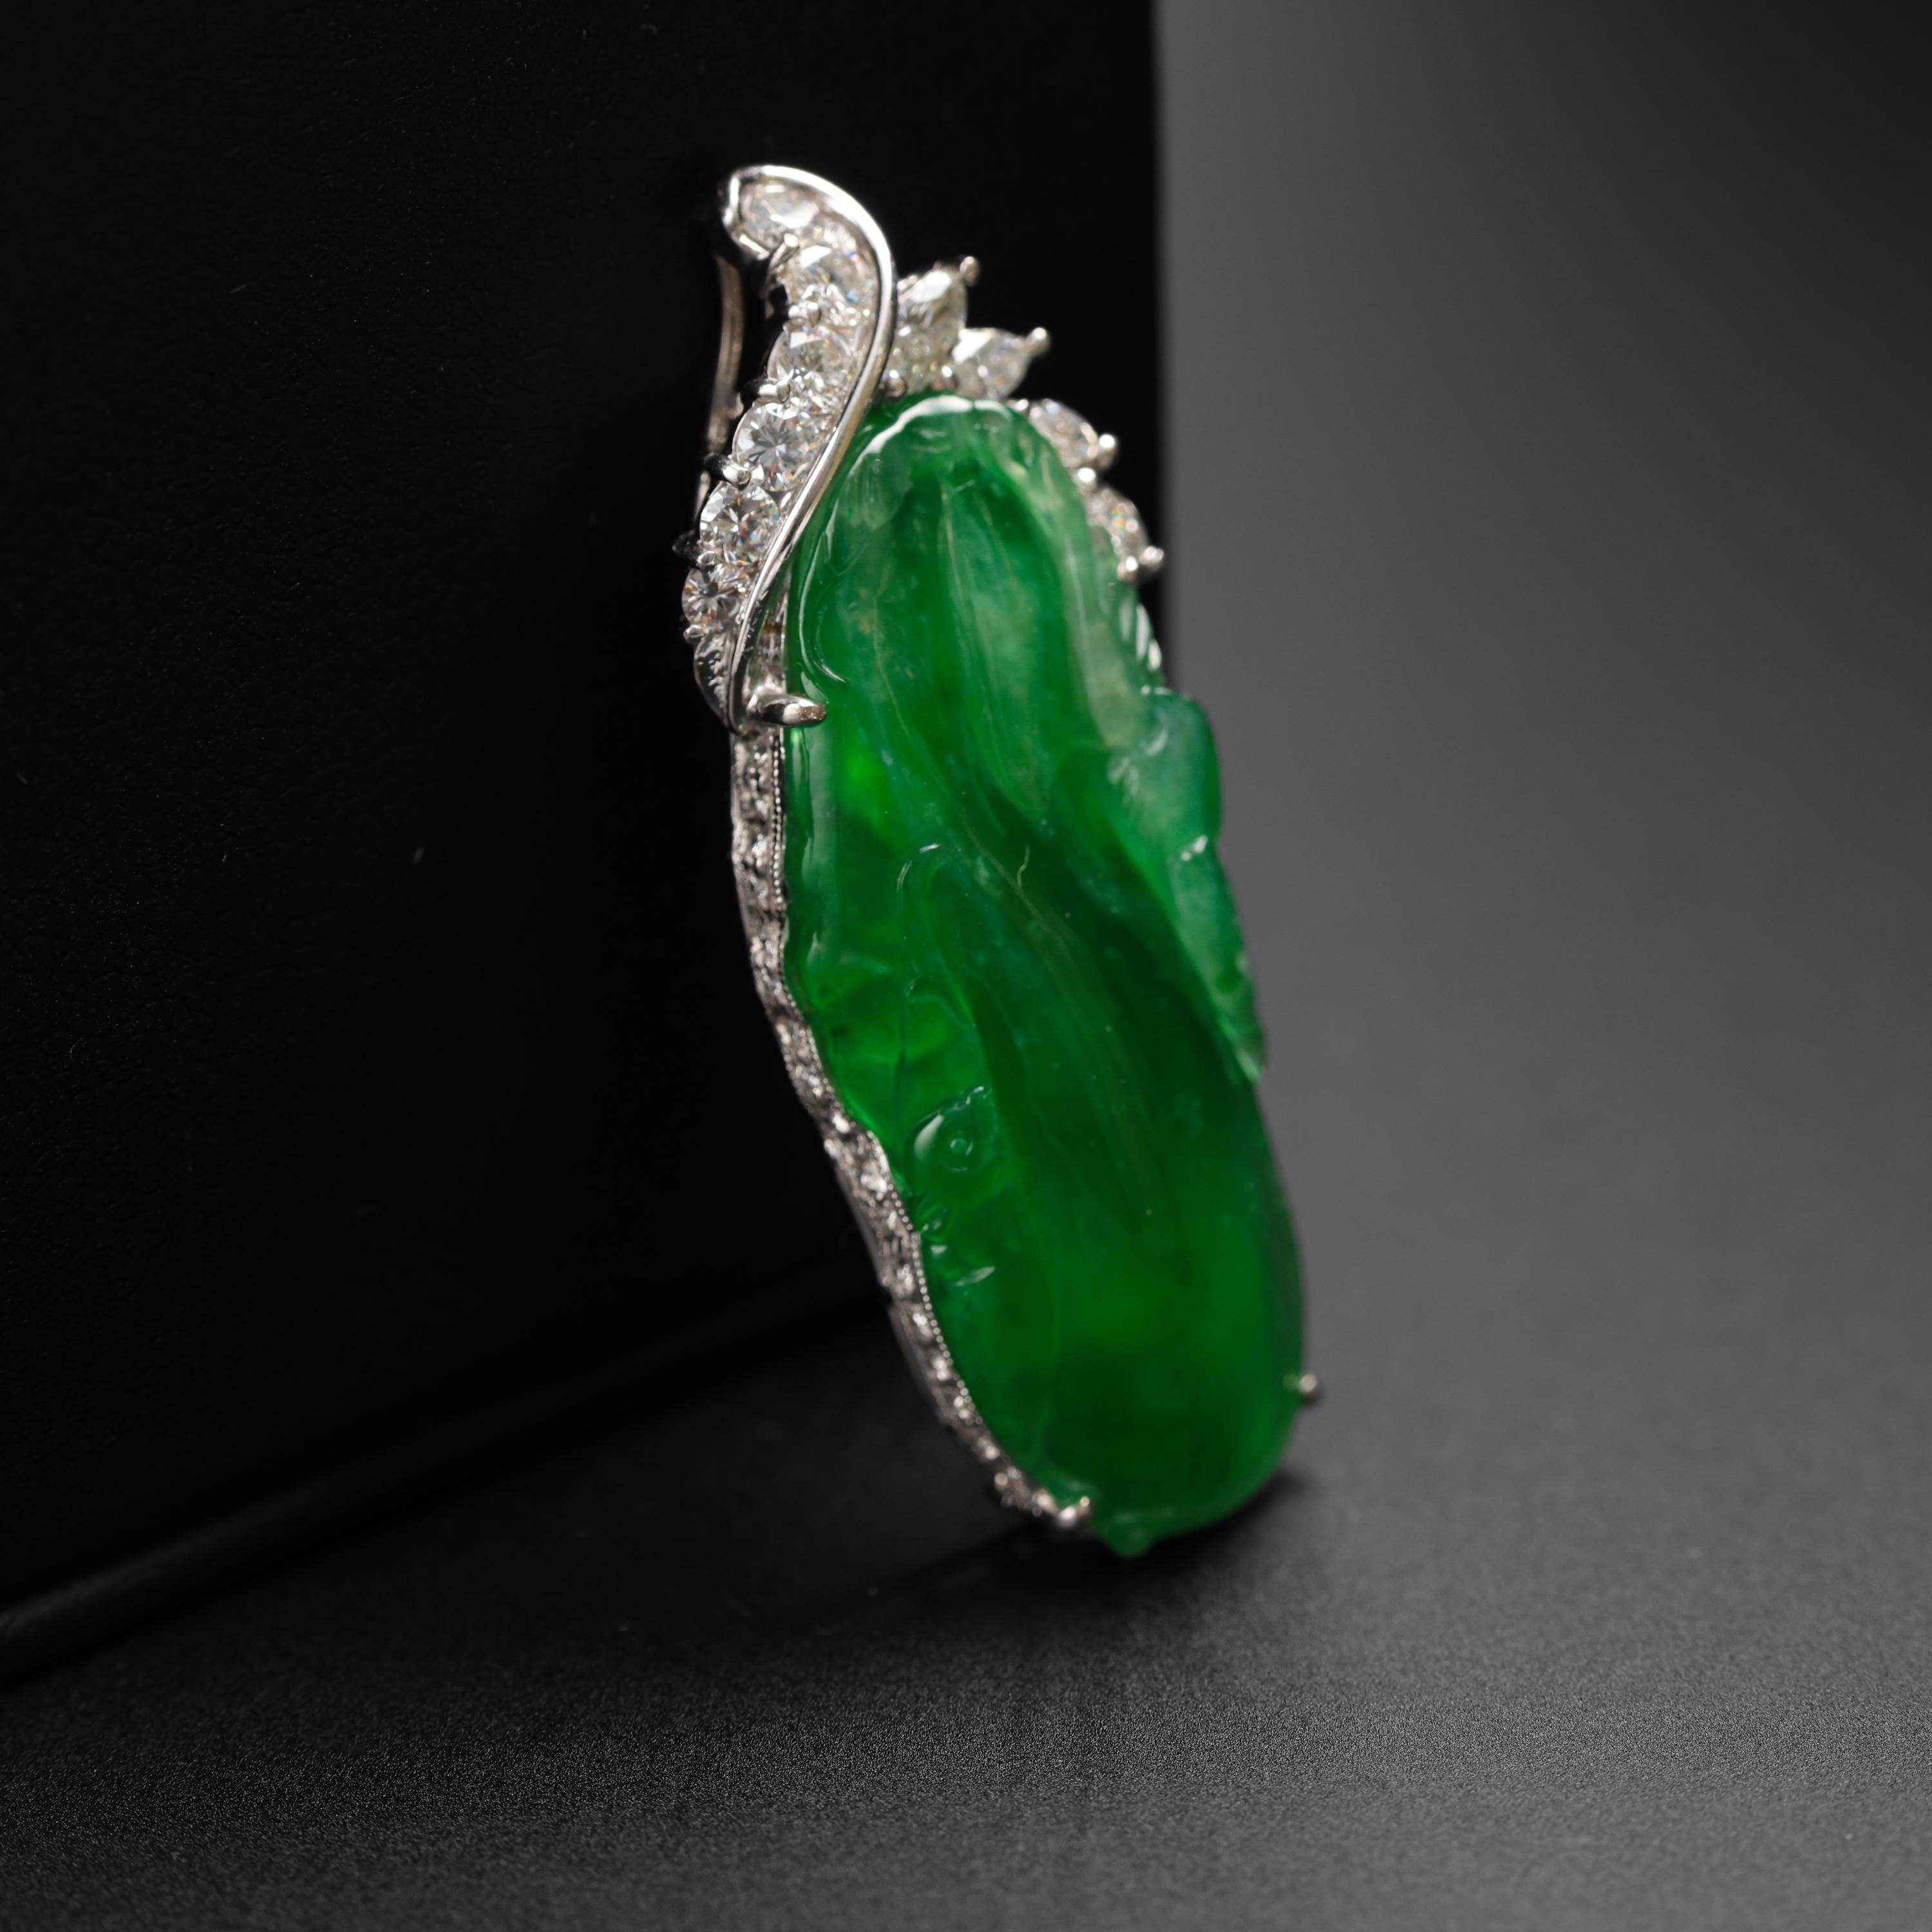 imperial jade necklace